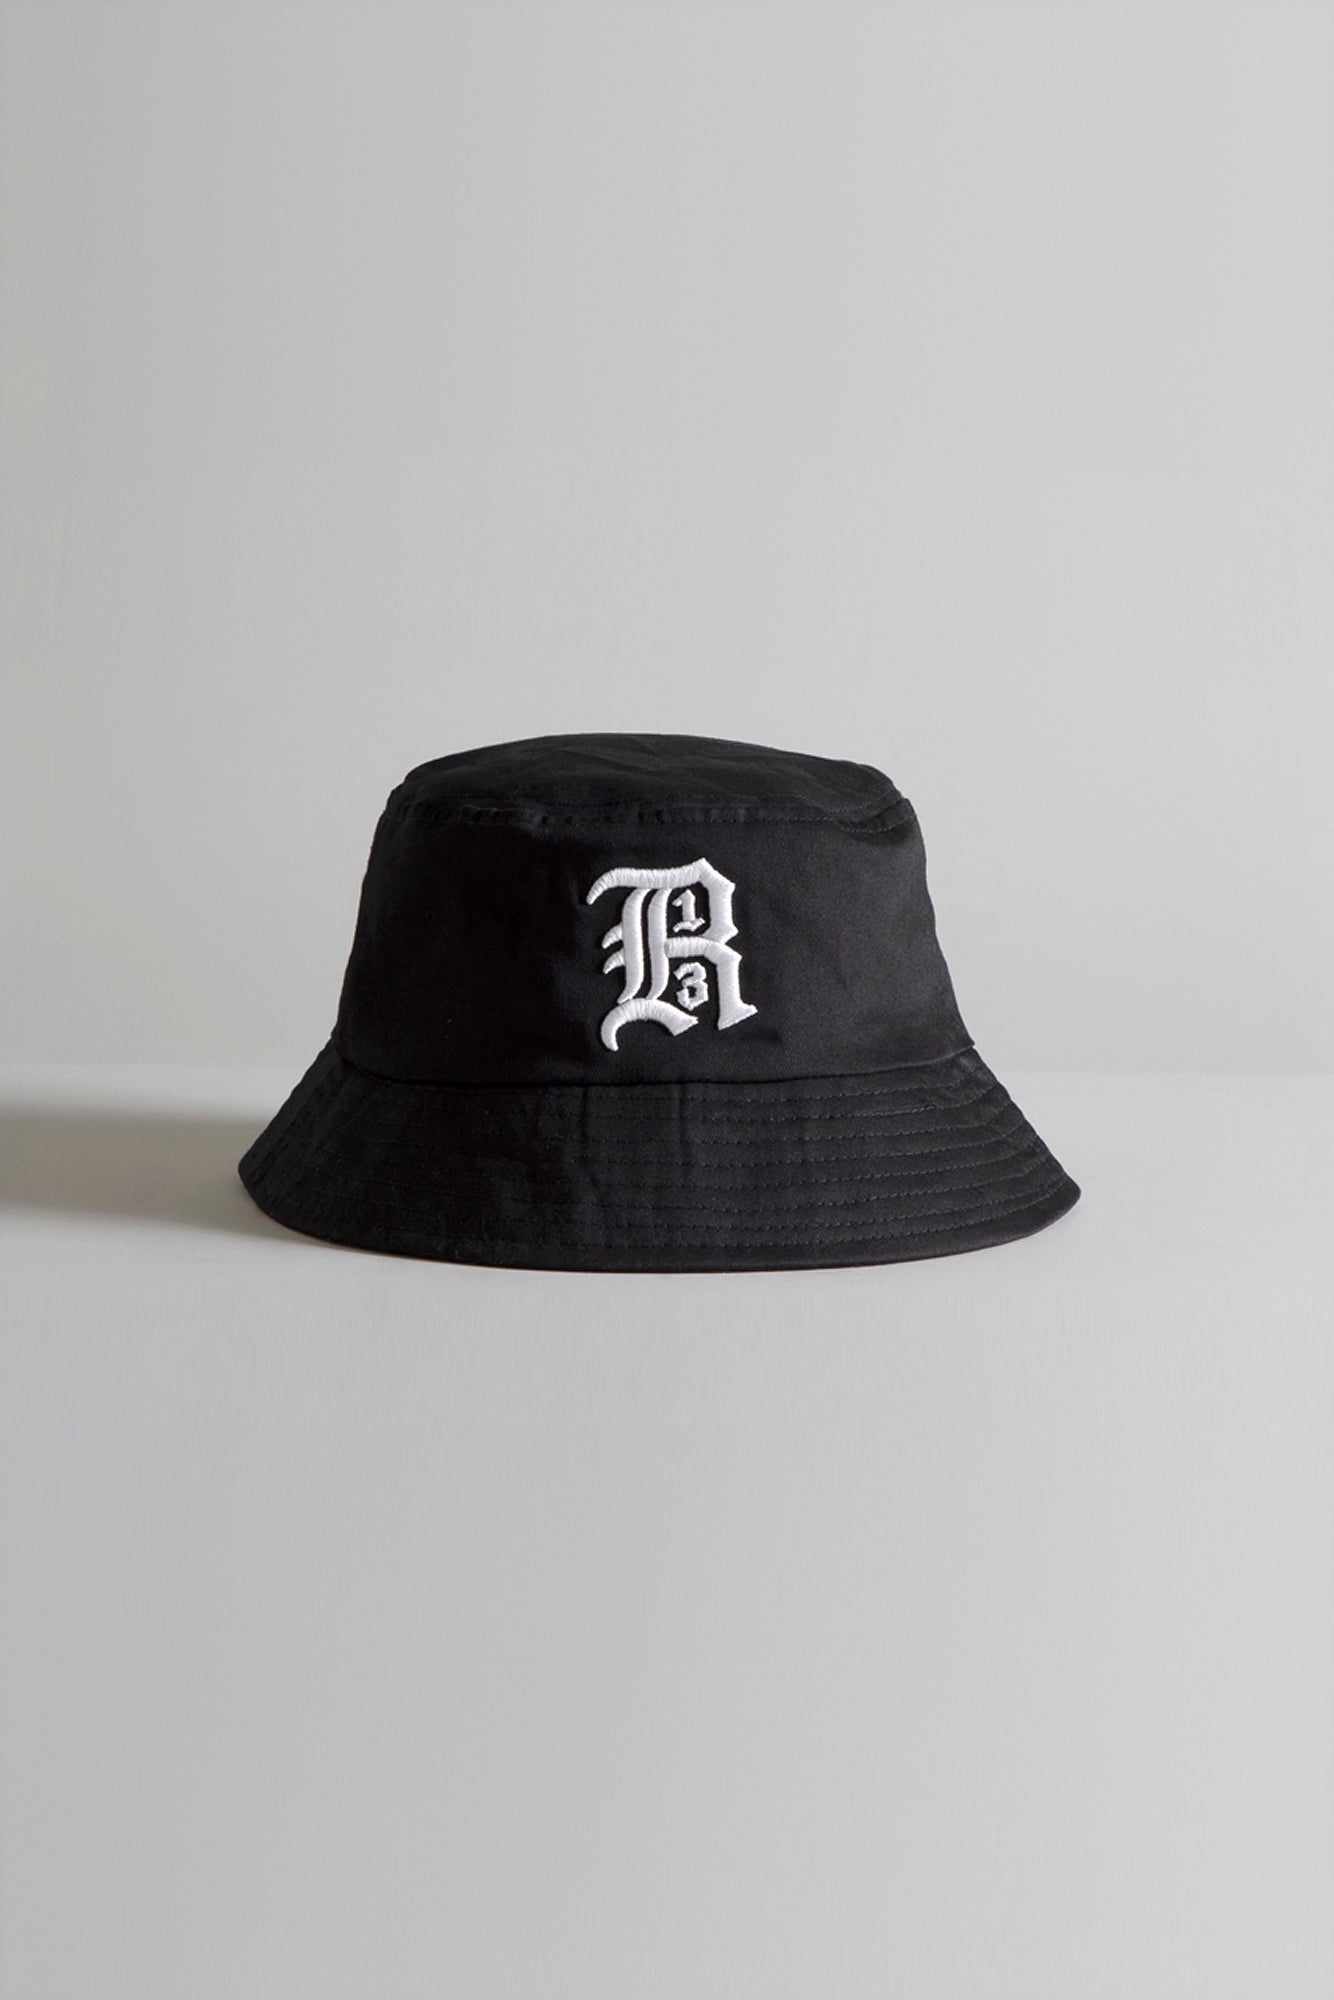 R13 BUCKET HAT | R13 Denim Official Site - 1